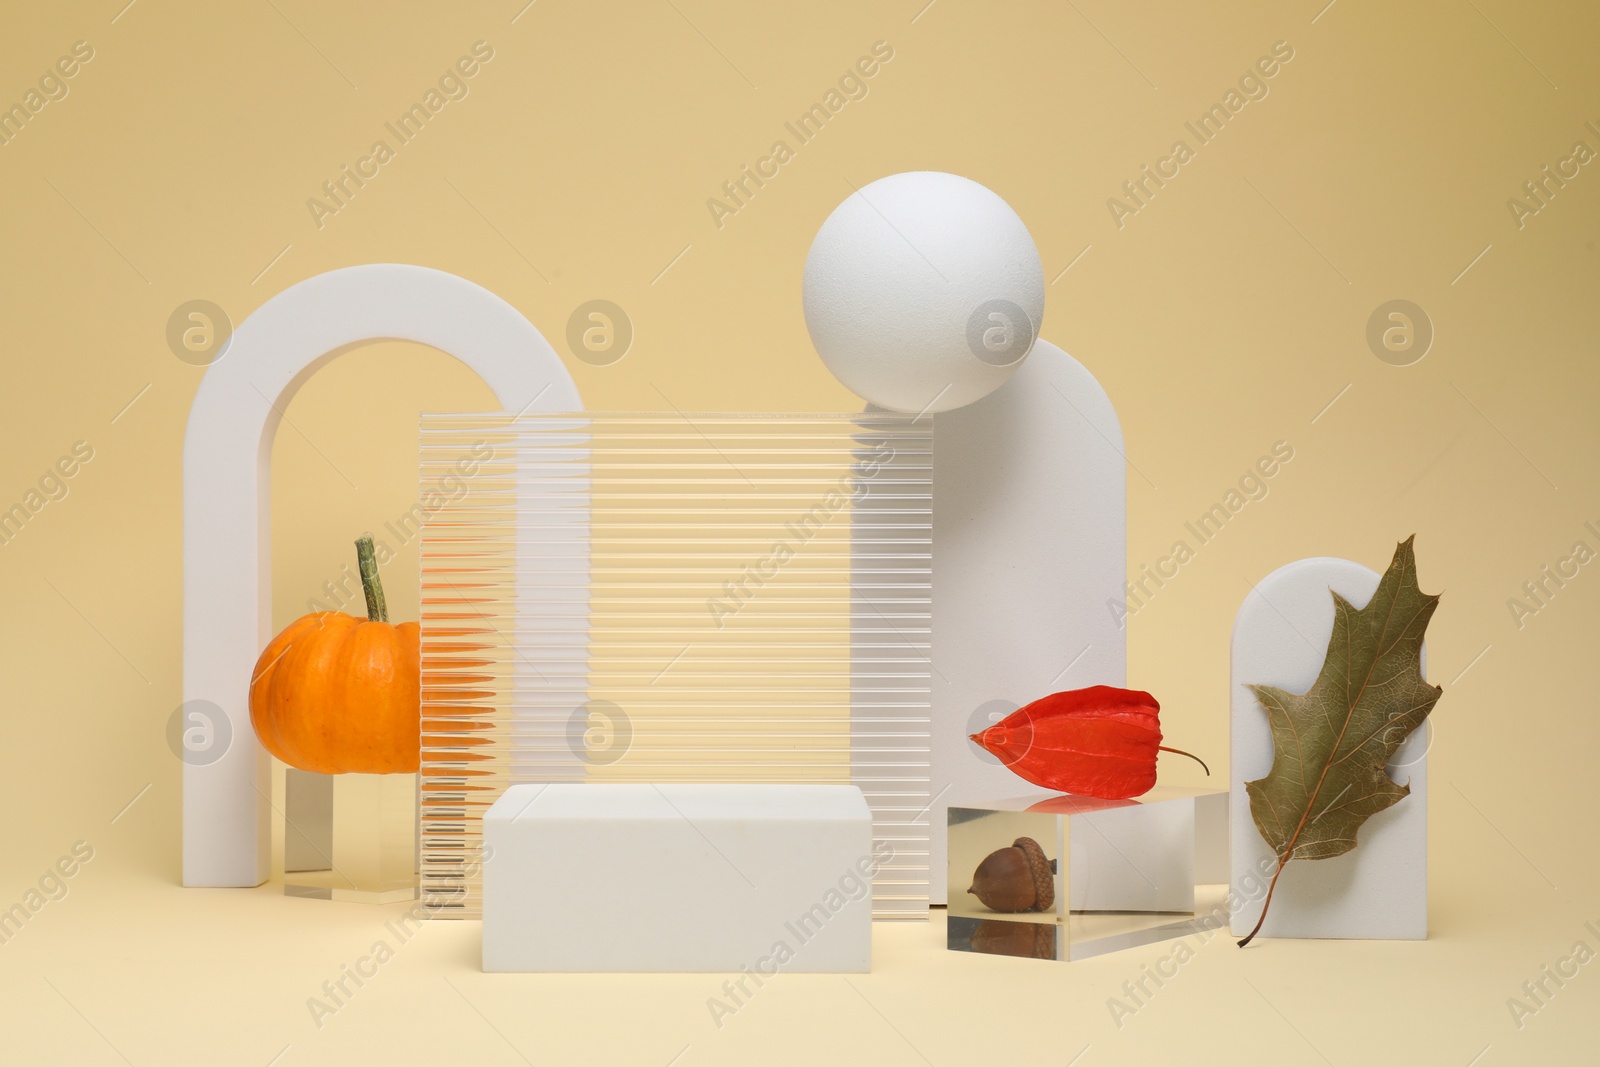 Photo of Stylish presentation for product. Geometric figures and autumn decor on beige background